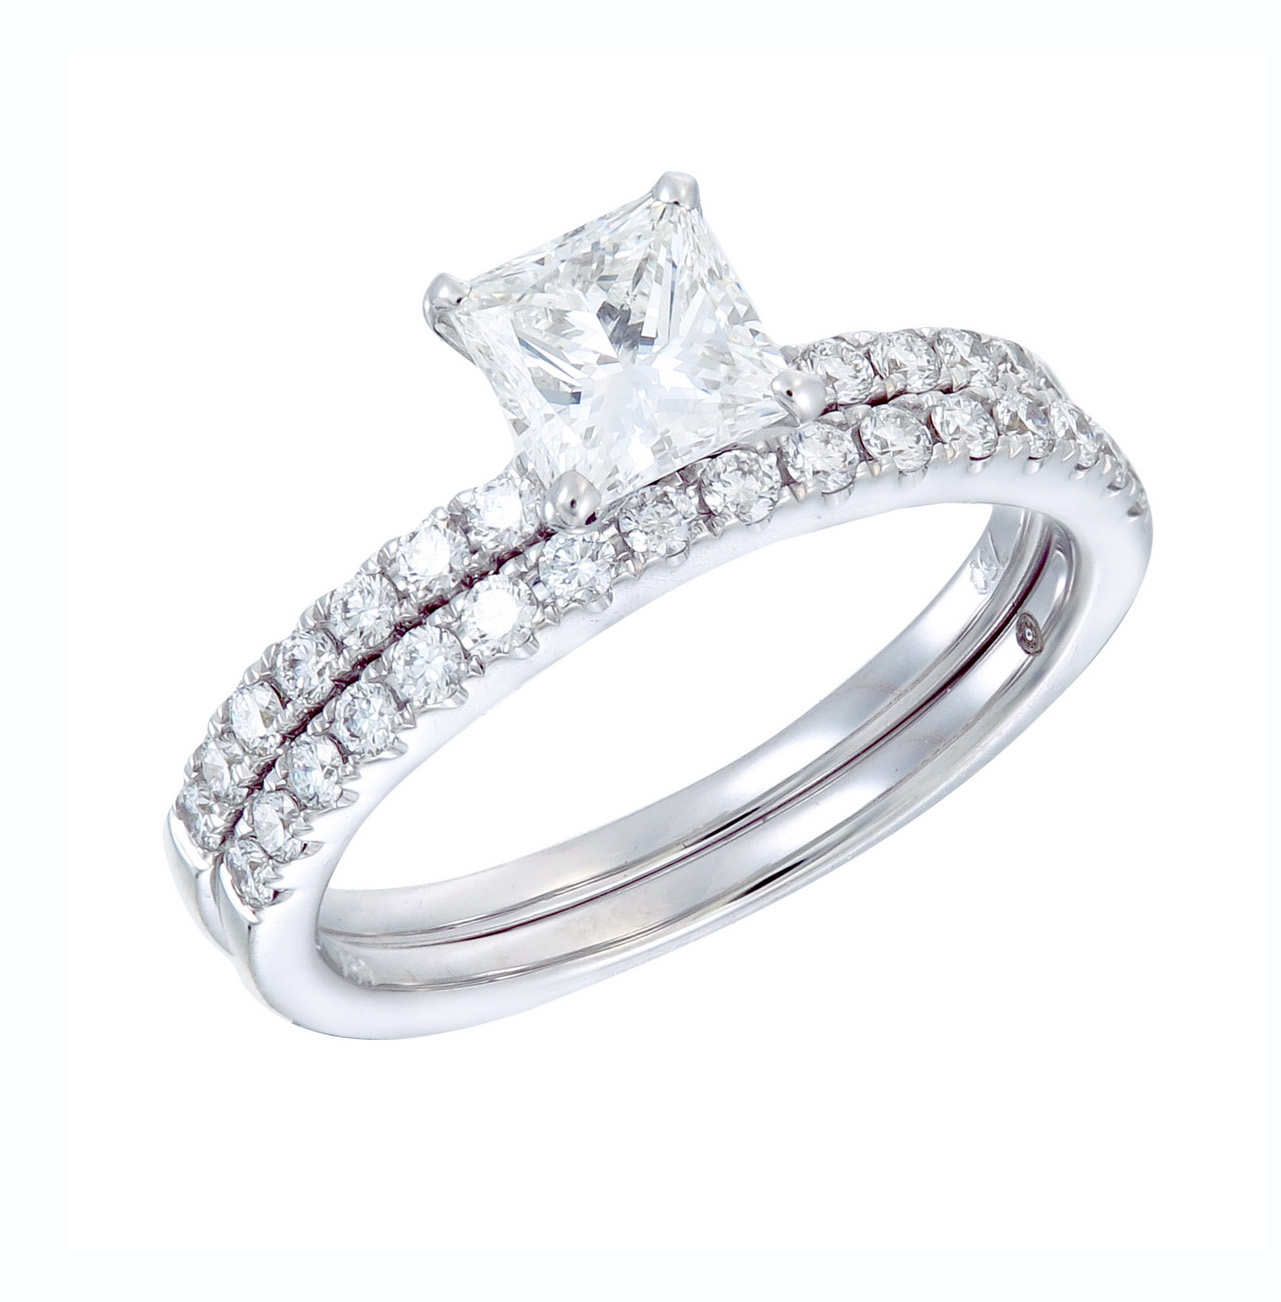 Princess cut Diamond Engagement Double ring Band